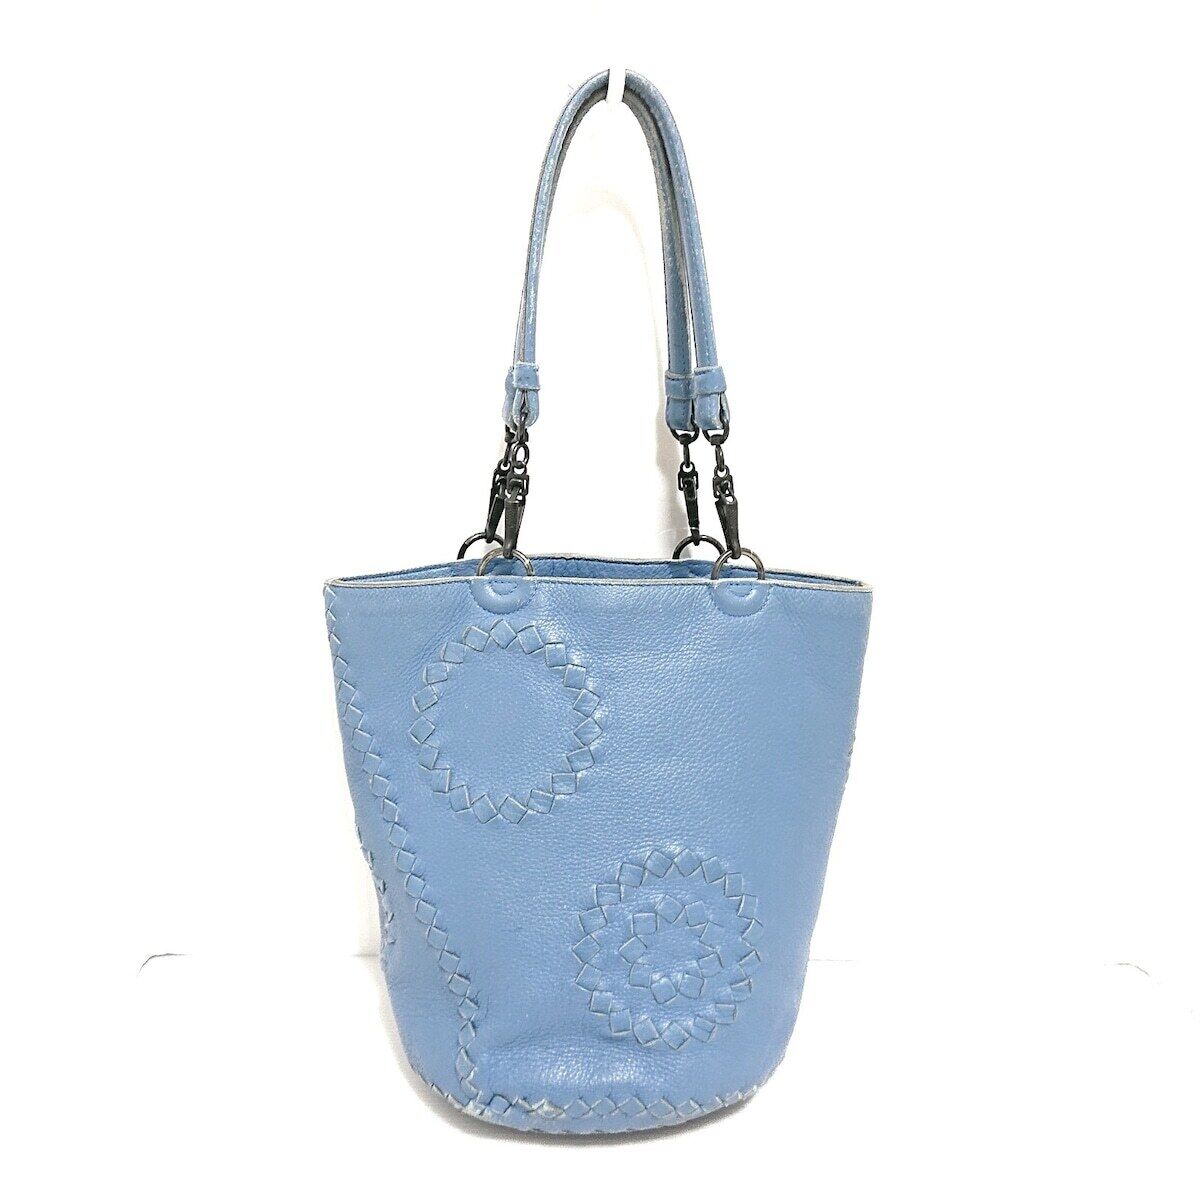 Auth BOTTEGA VENETA - 194900 Light Blue Leather Tote Bag